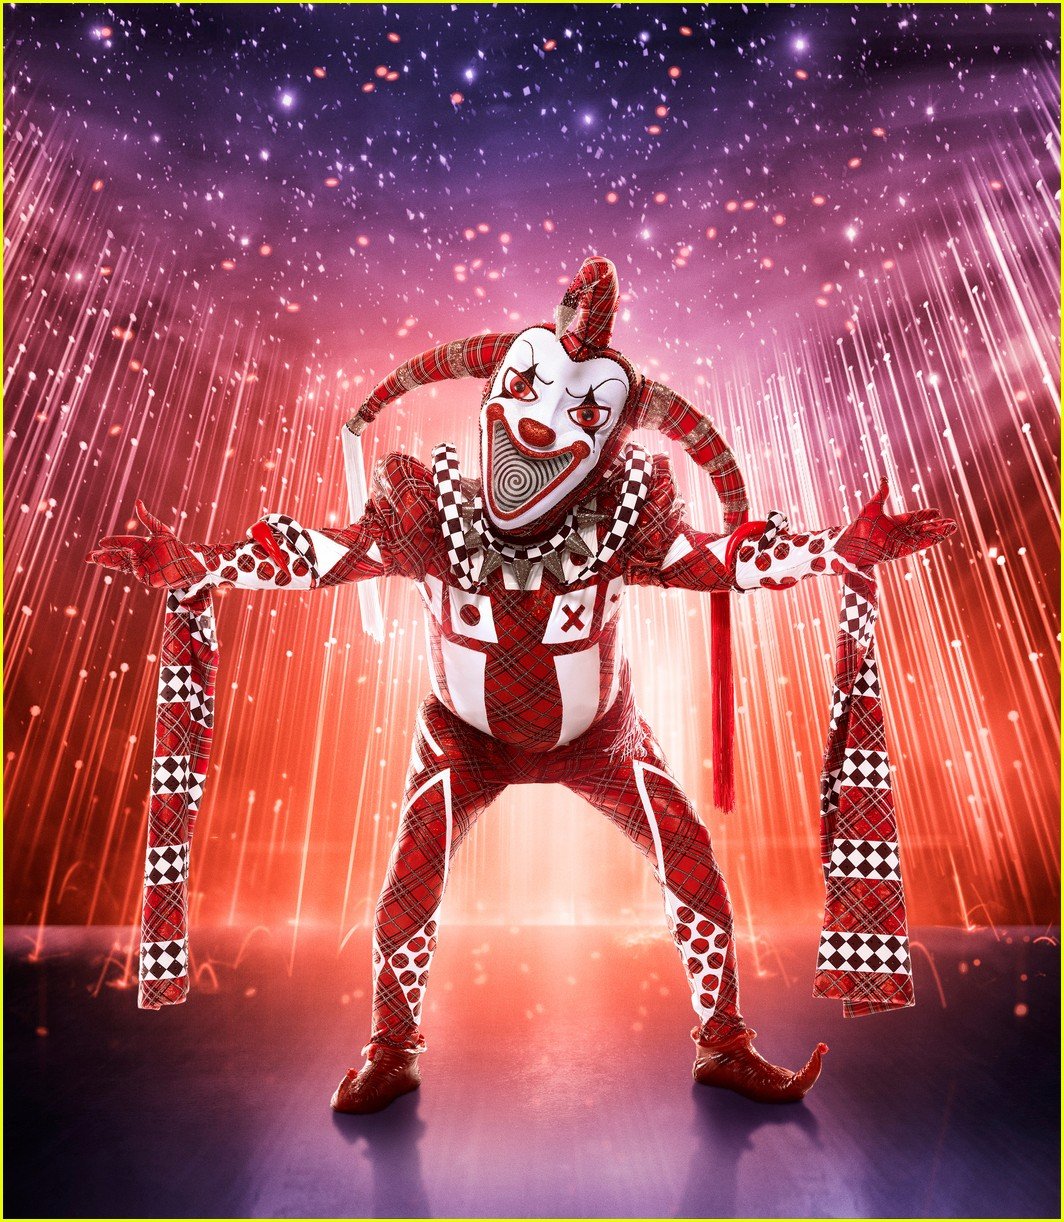 jester performs on masked singer 01